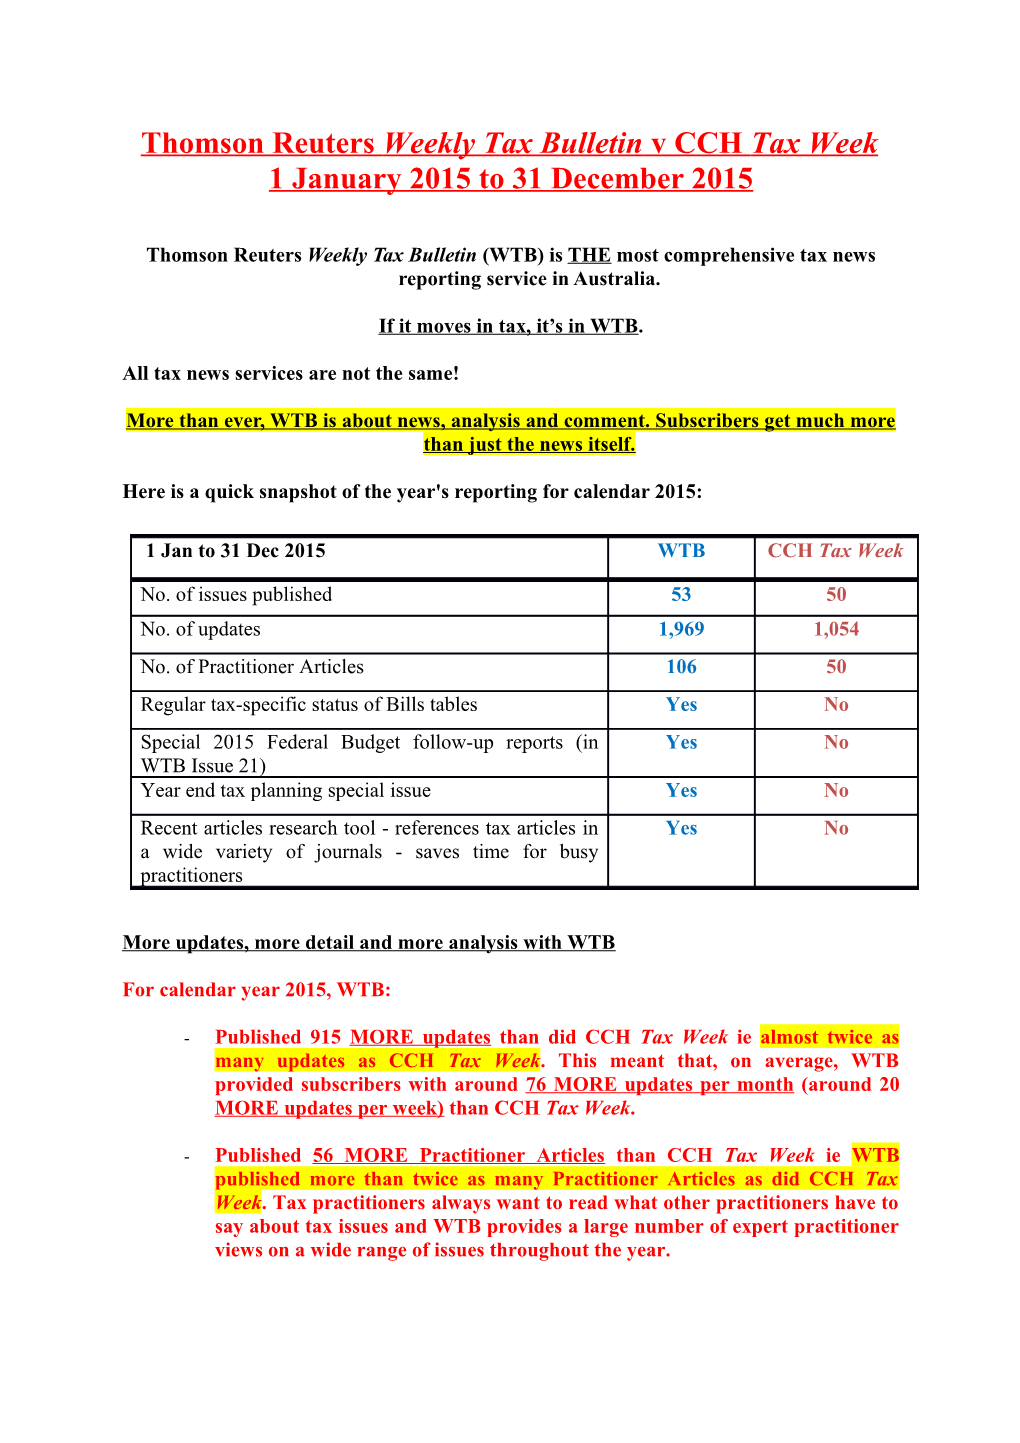 Thomson ATP Weekly Tax Bulletin V CCH Tax Week